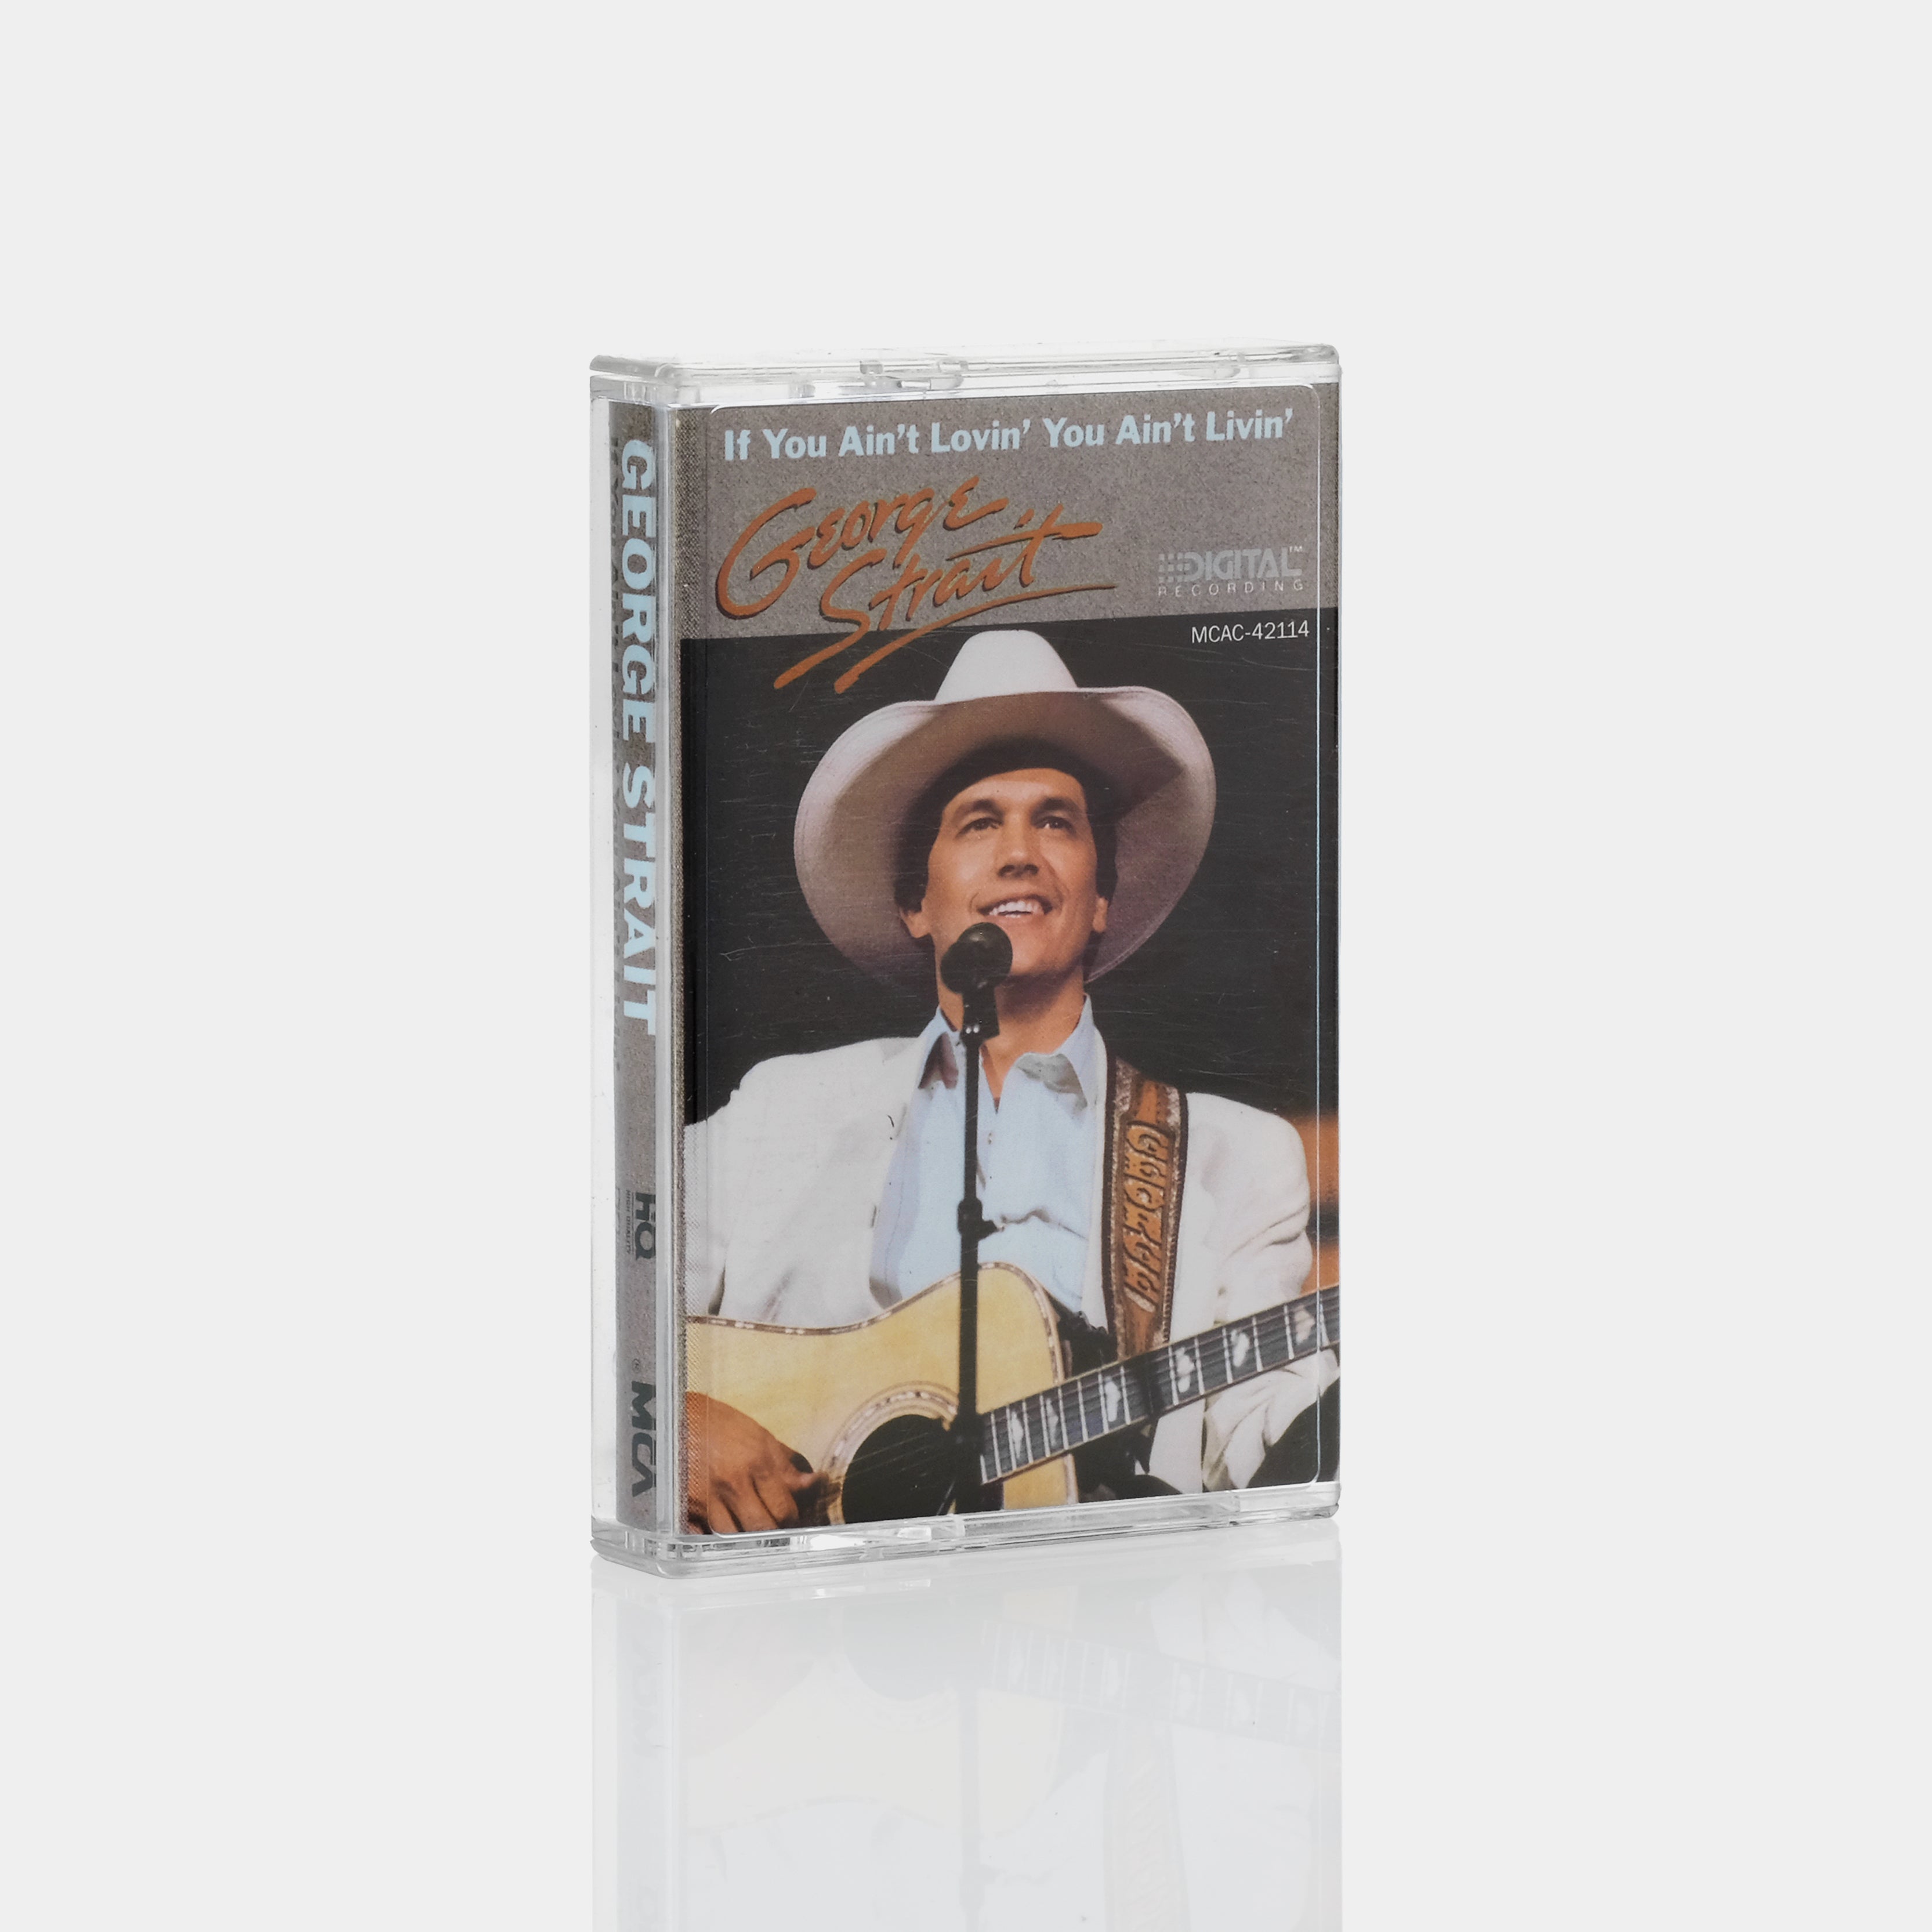 George Strait - If You Ain't Lovin' (You Ain't Livin') Cassette Tape